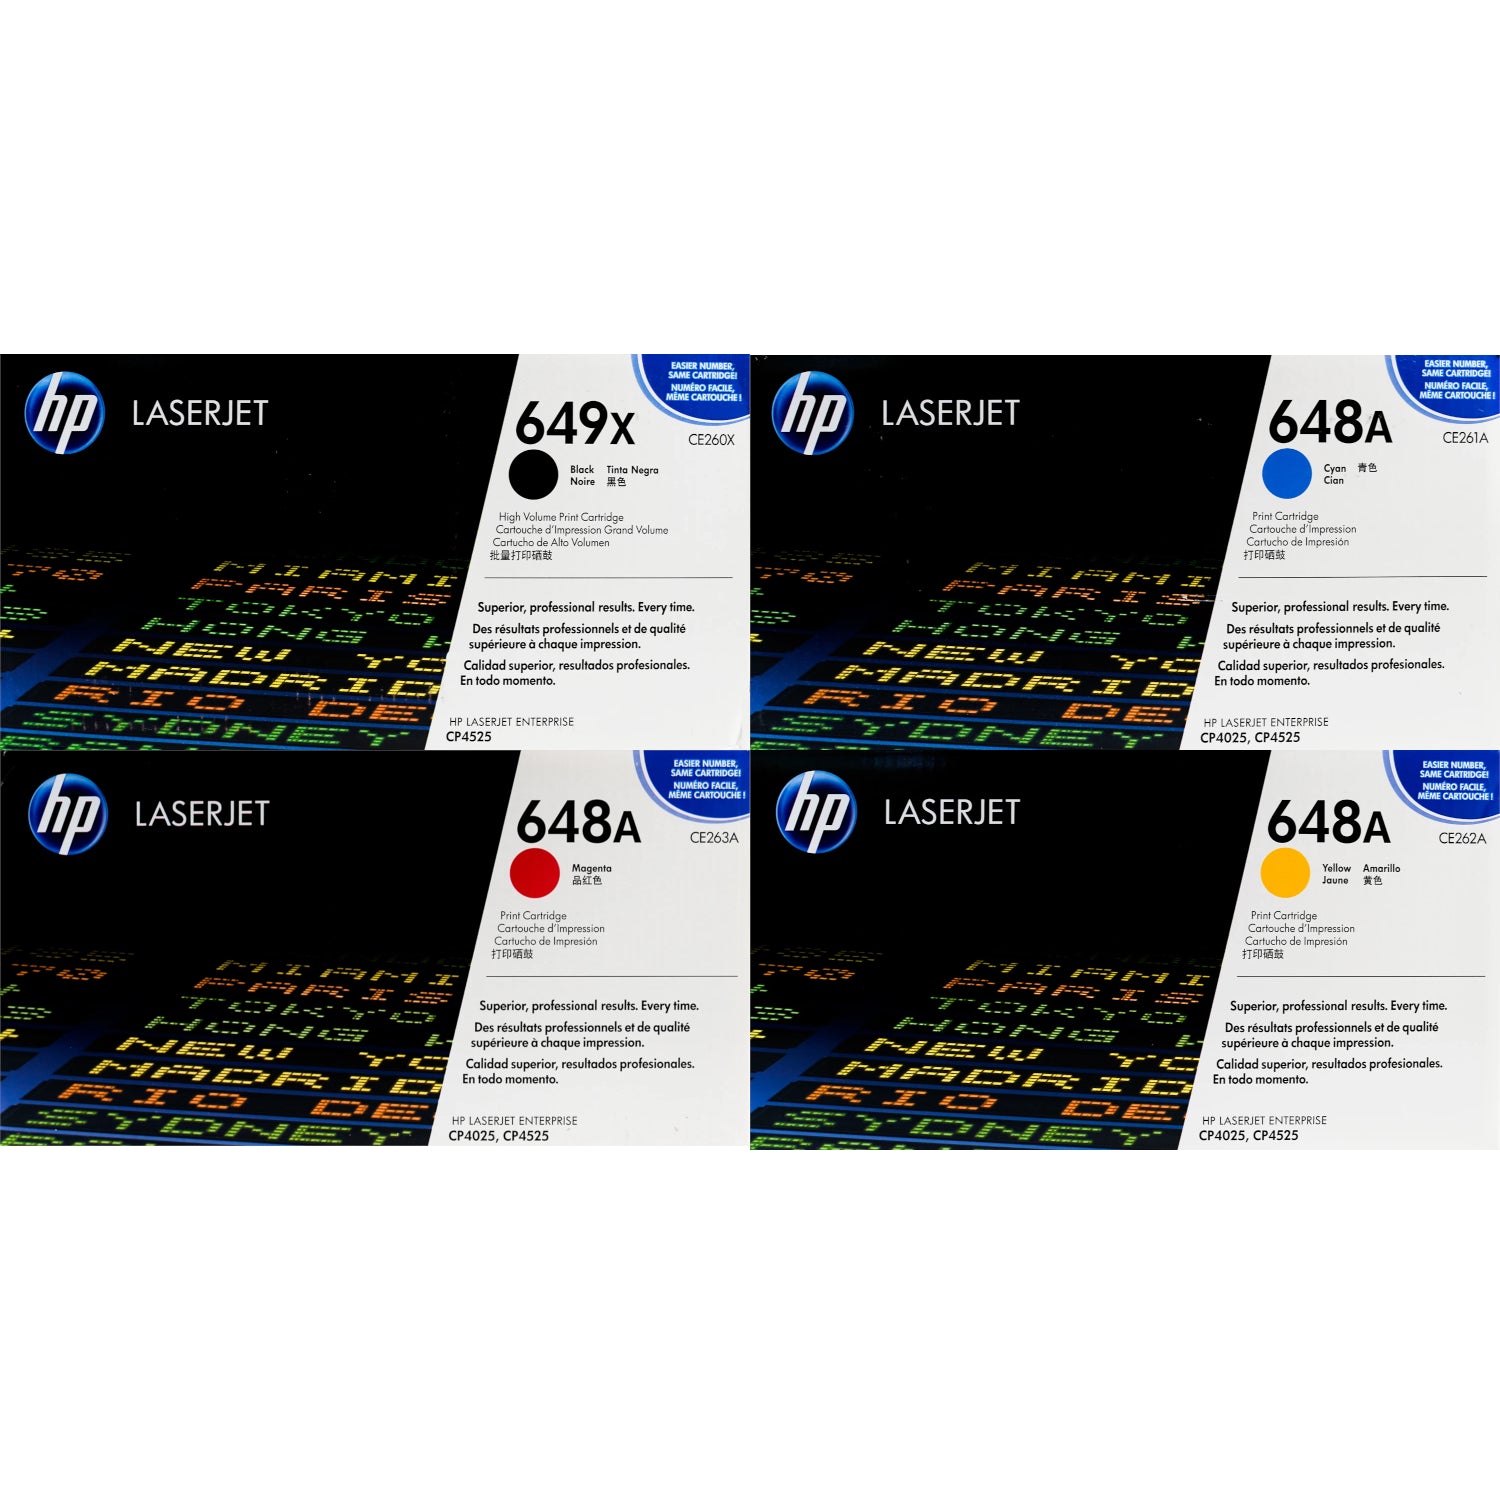 HP 649X / 648A Toner SET - Combo 4 Pack - CE260X CE261A CE262A CE263A - Black Cyan Magenta Yellow - Original HP LaserJet Toner Cartridges